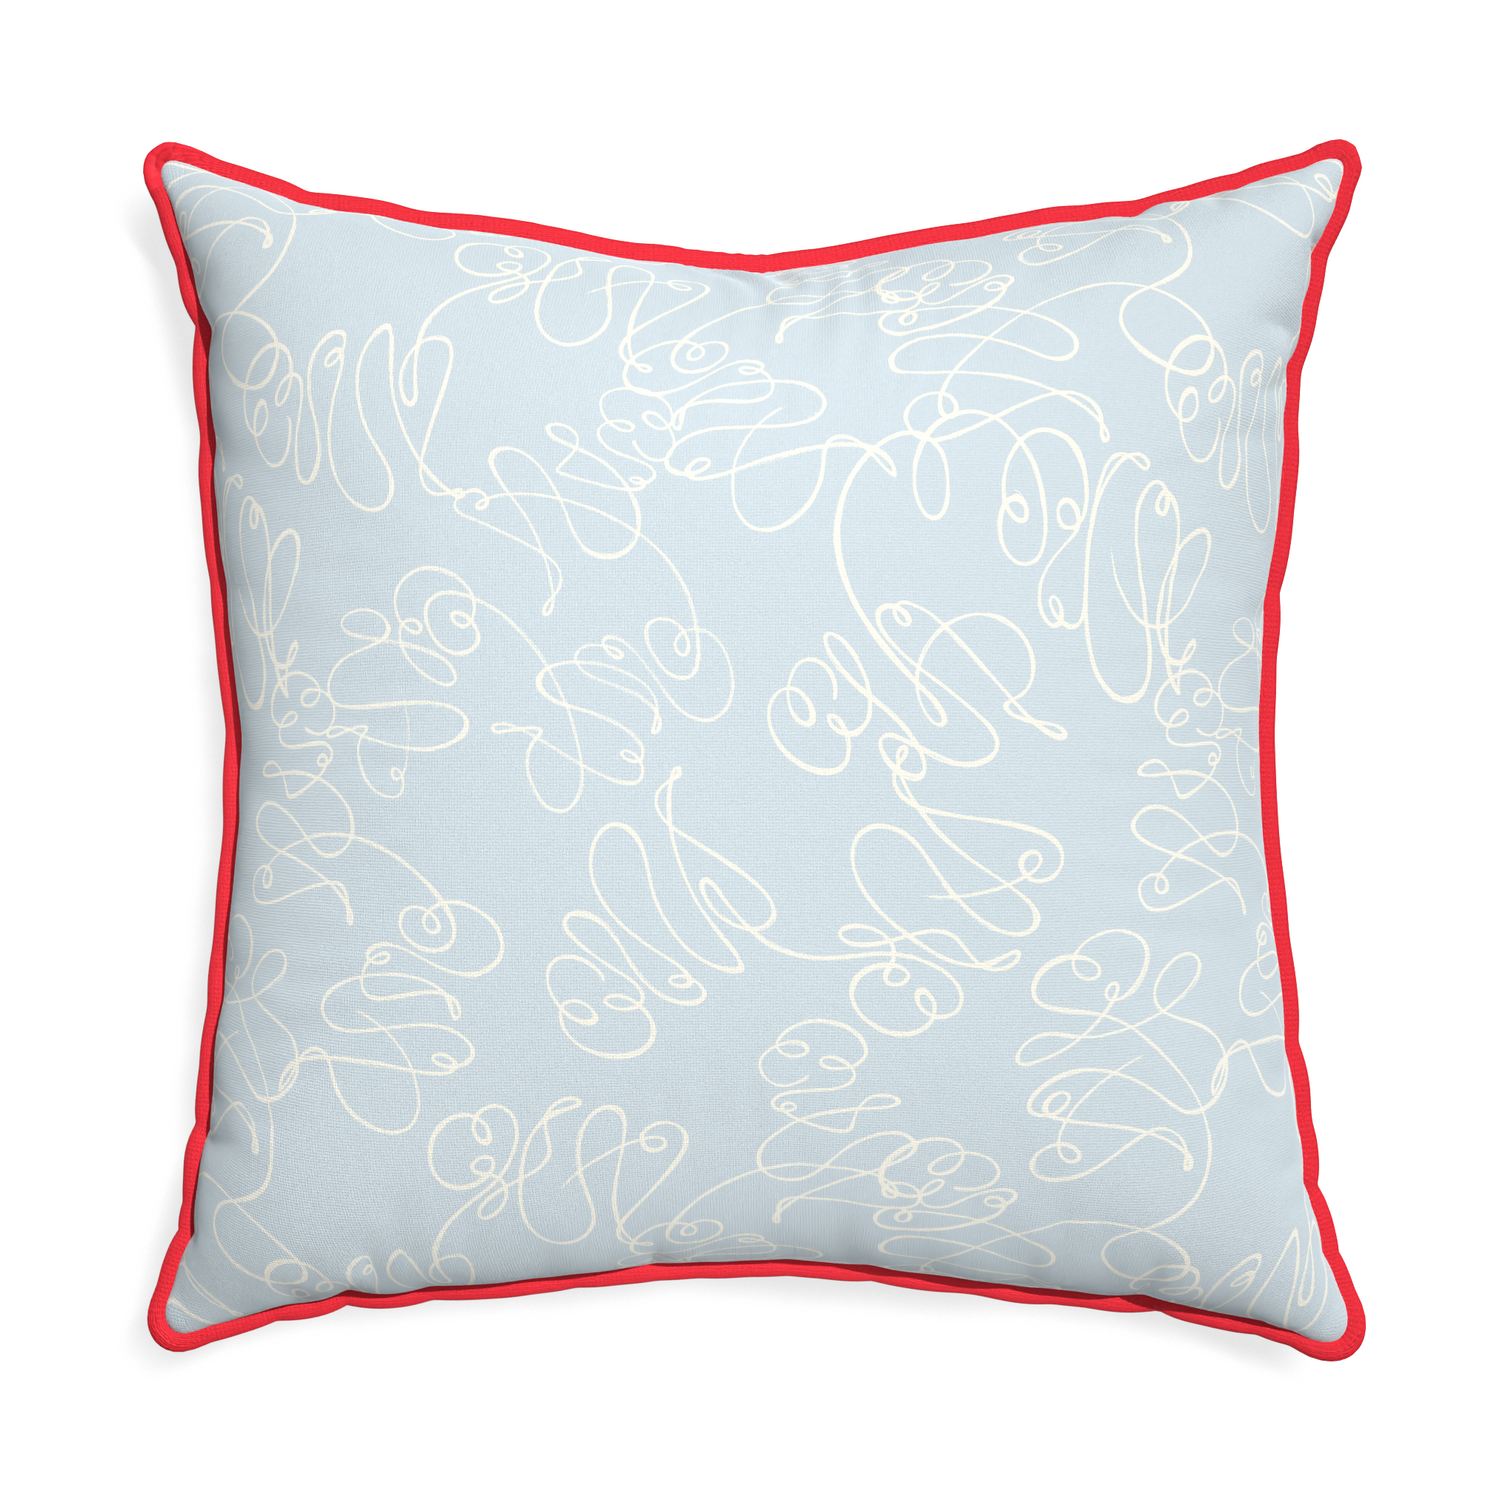 Euro-sham mirabella custom pillow with cherry piping on white background